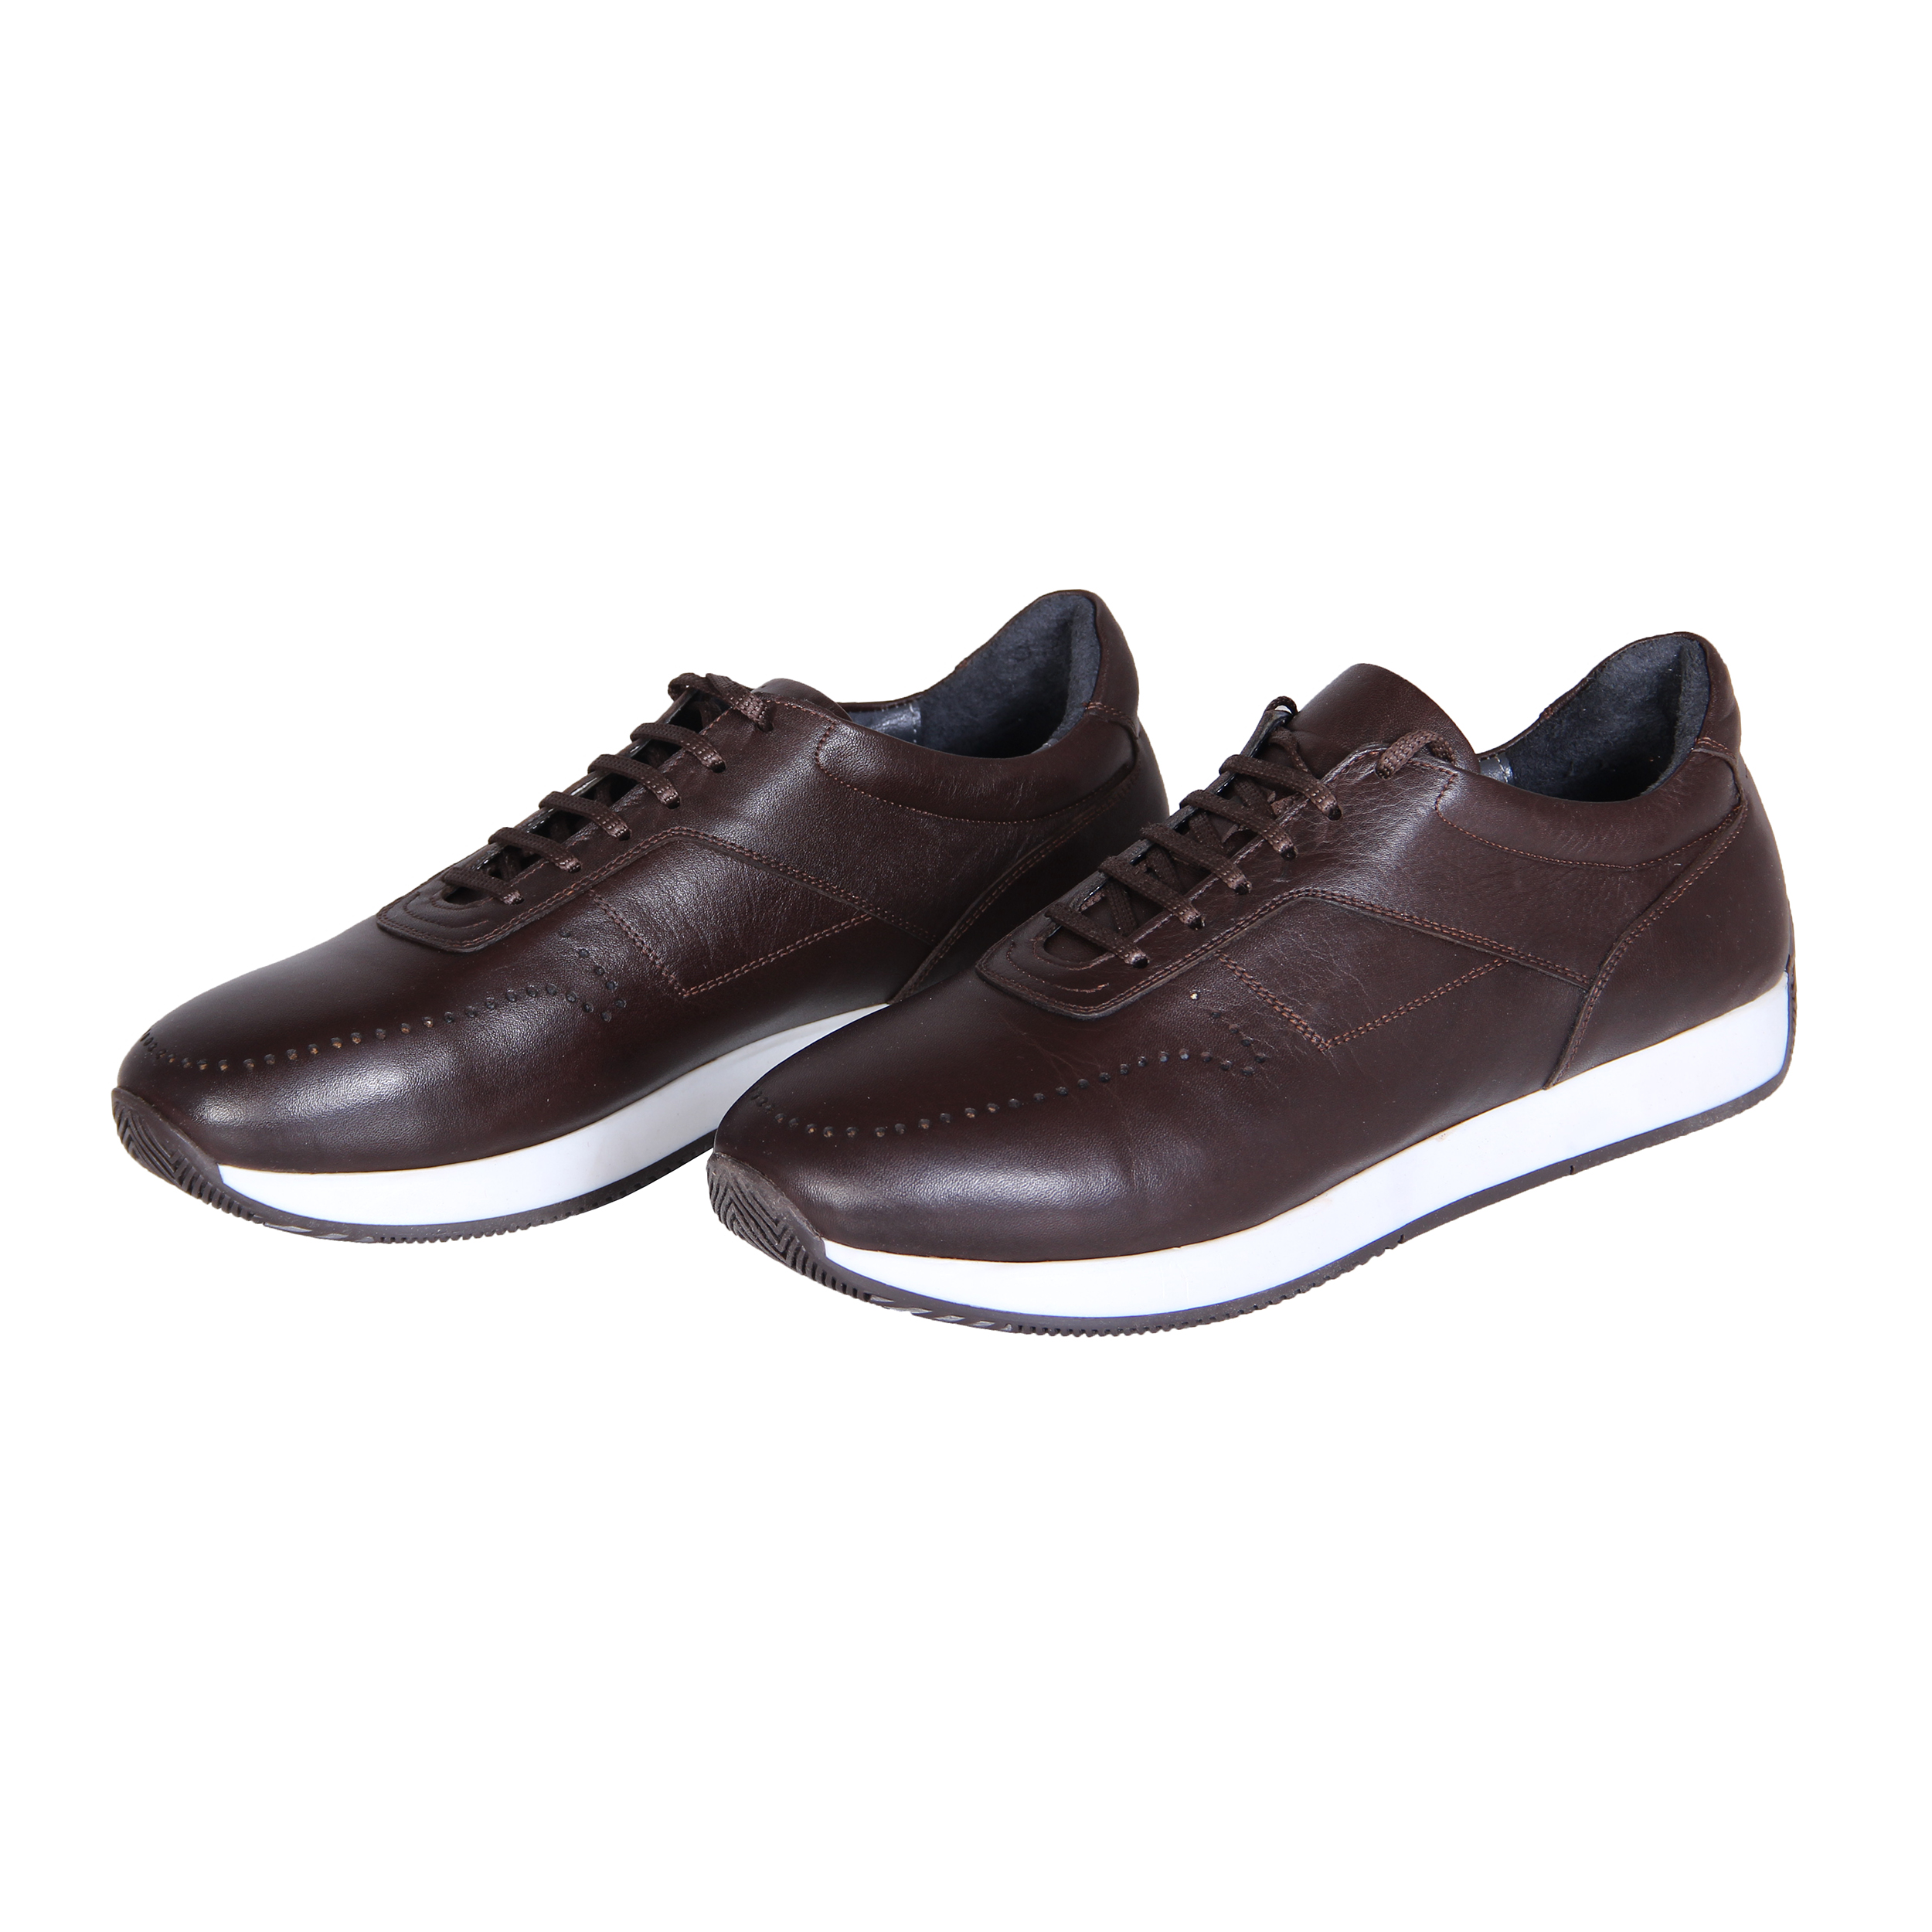 SHAHRECHARM men's casual shoes ,GH5003-3 Model